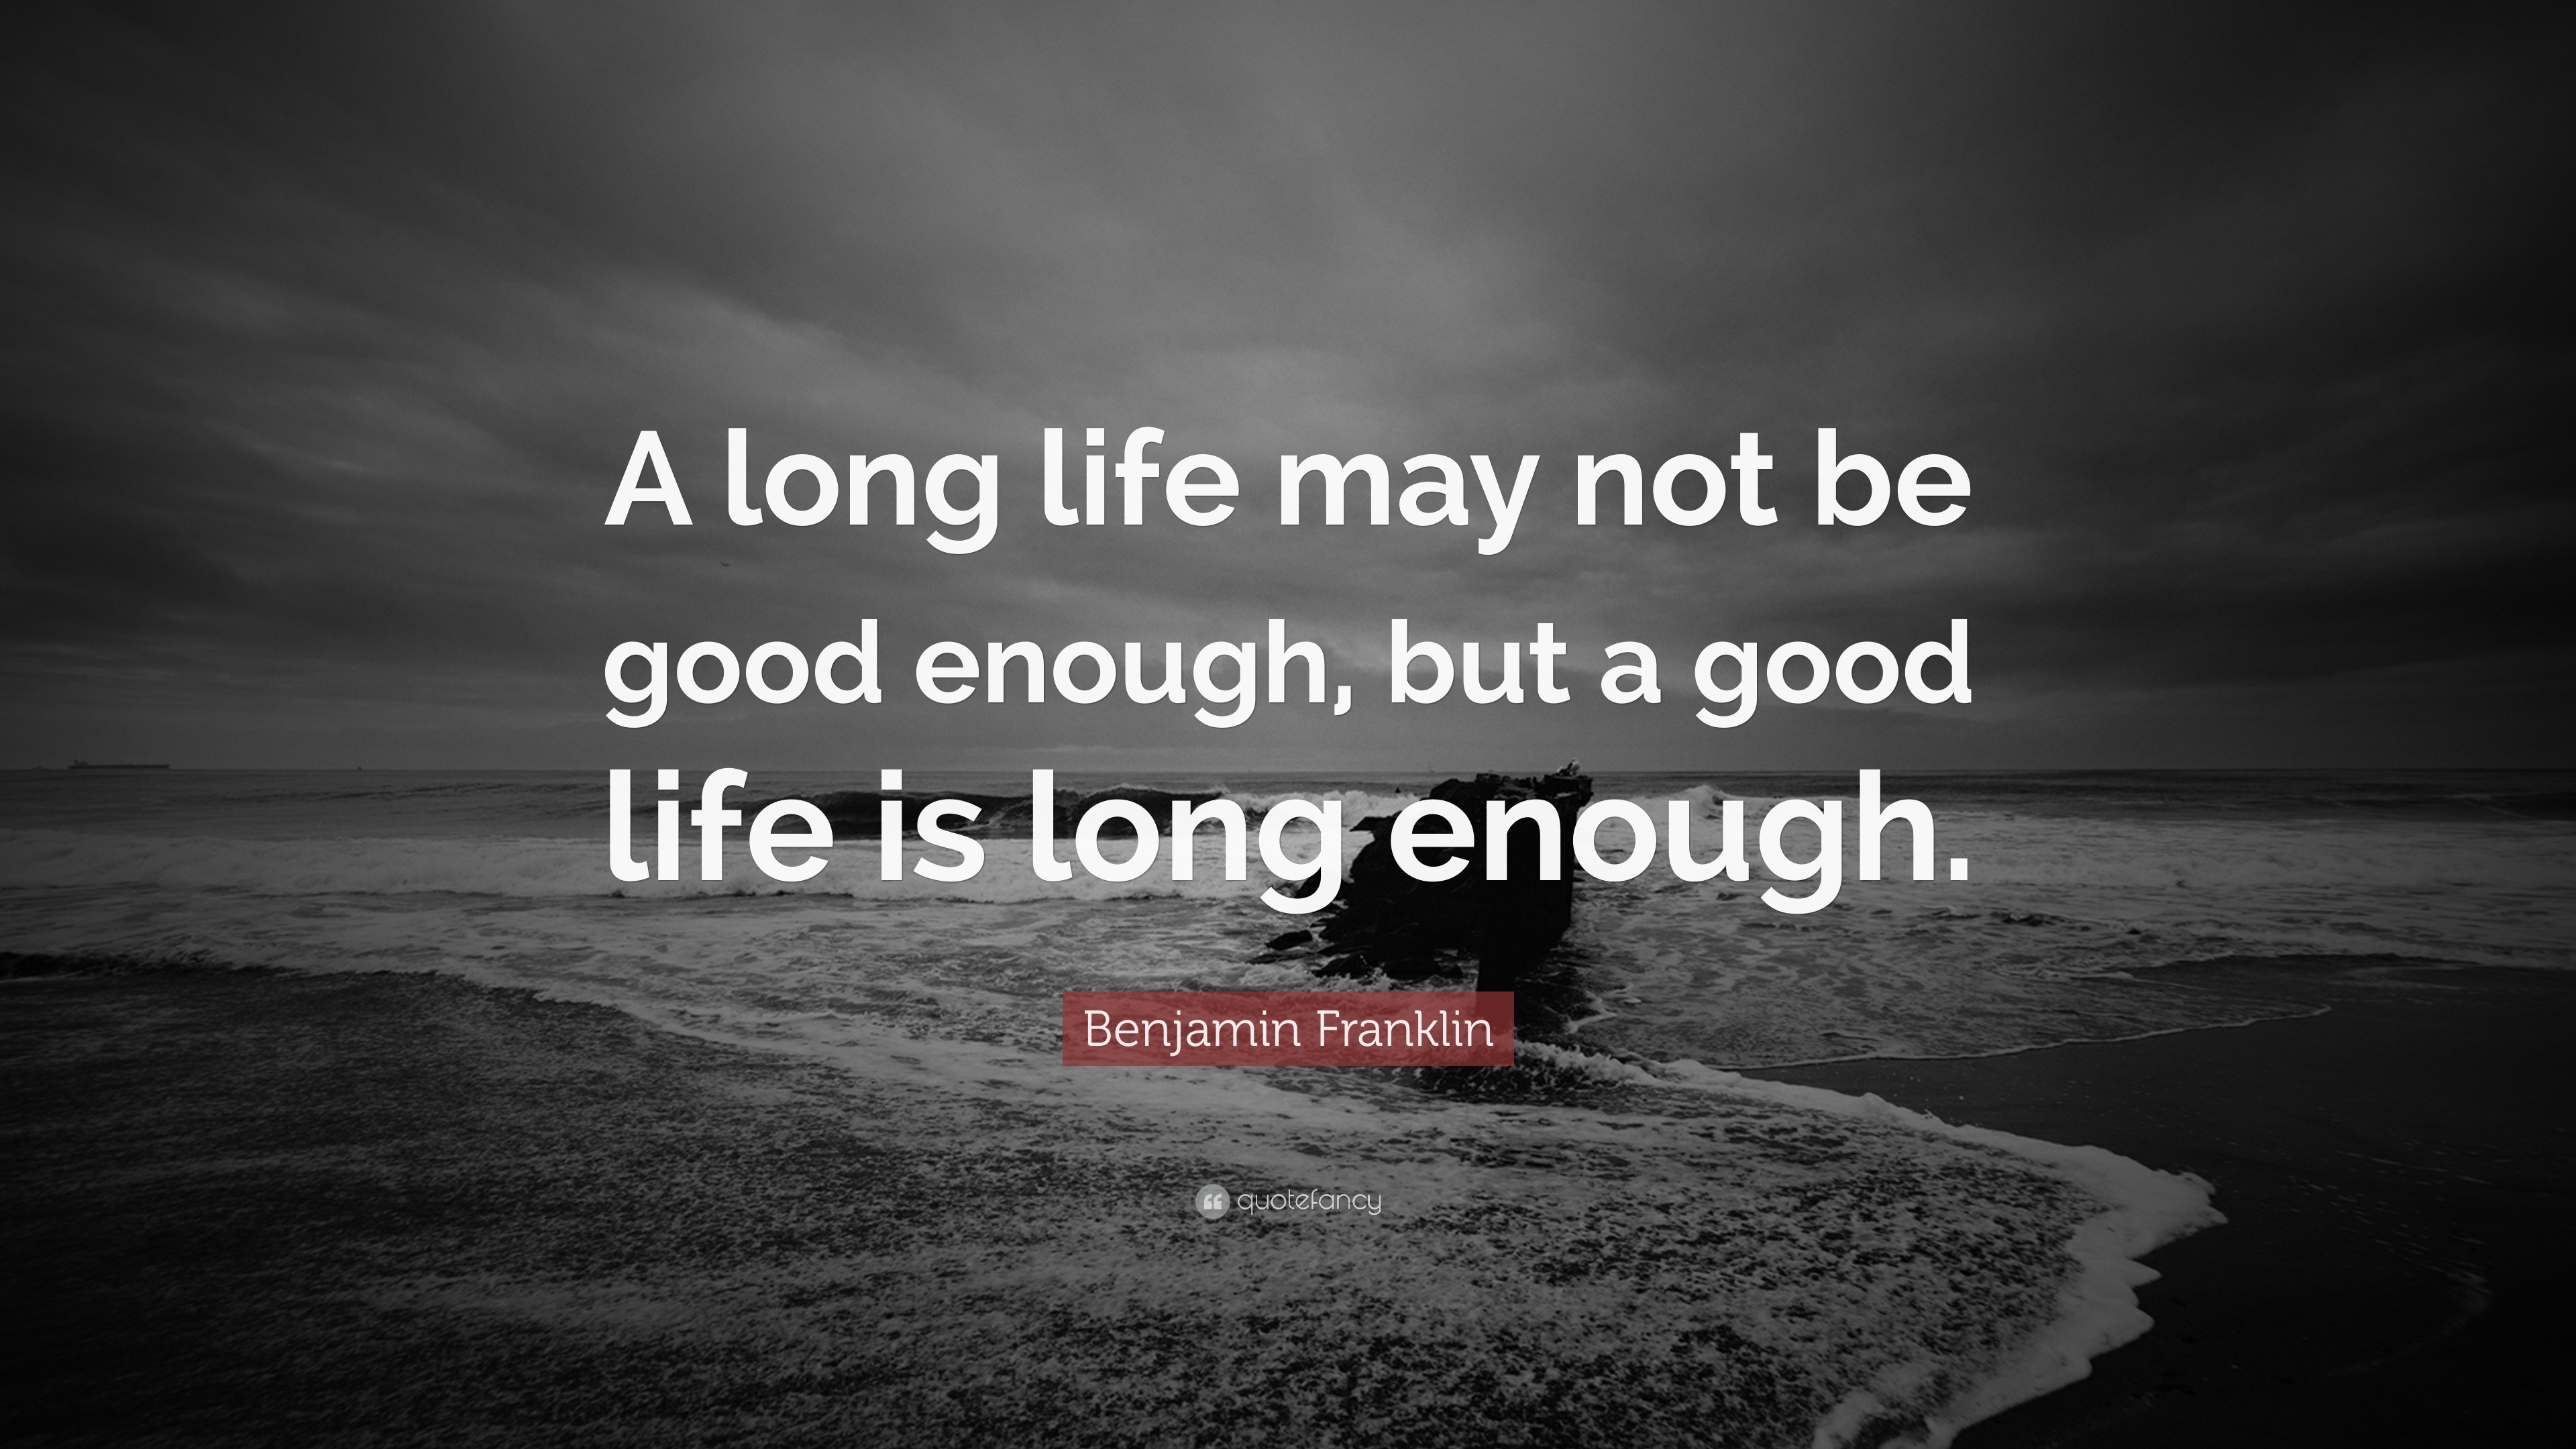 Benjamin Franklin Quote: “A long life may not be good enough, but a